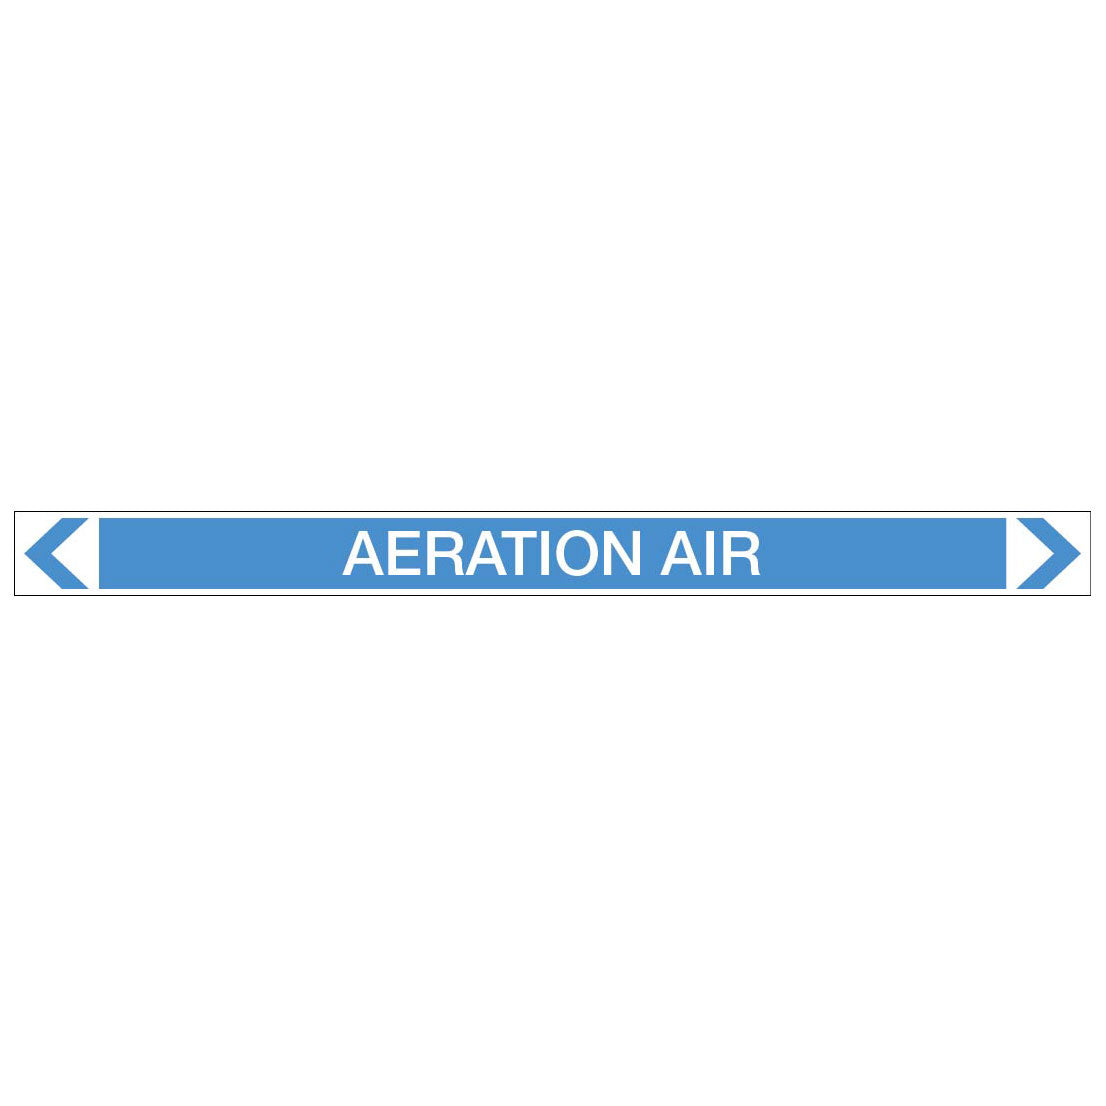 Air - Aeration Air - Pipe Marker Sticker